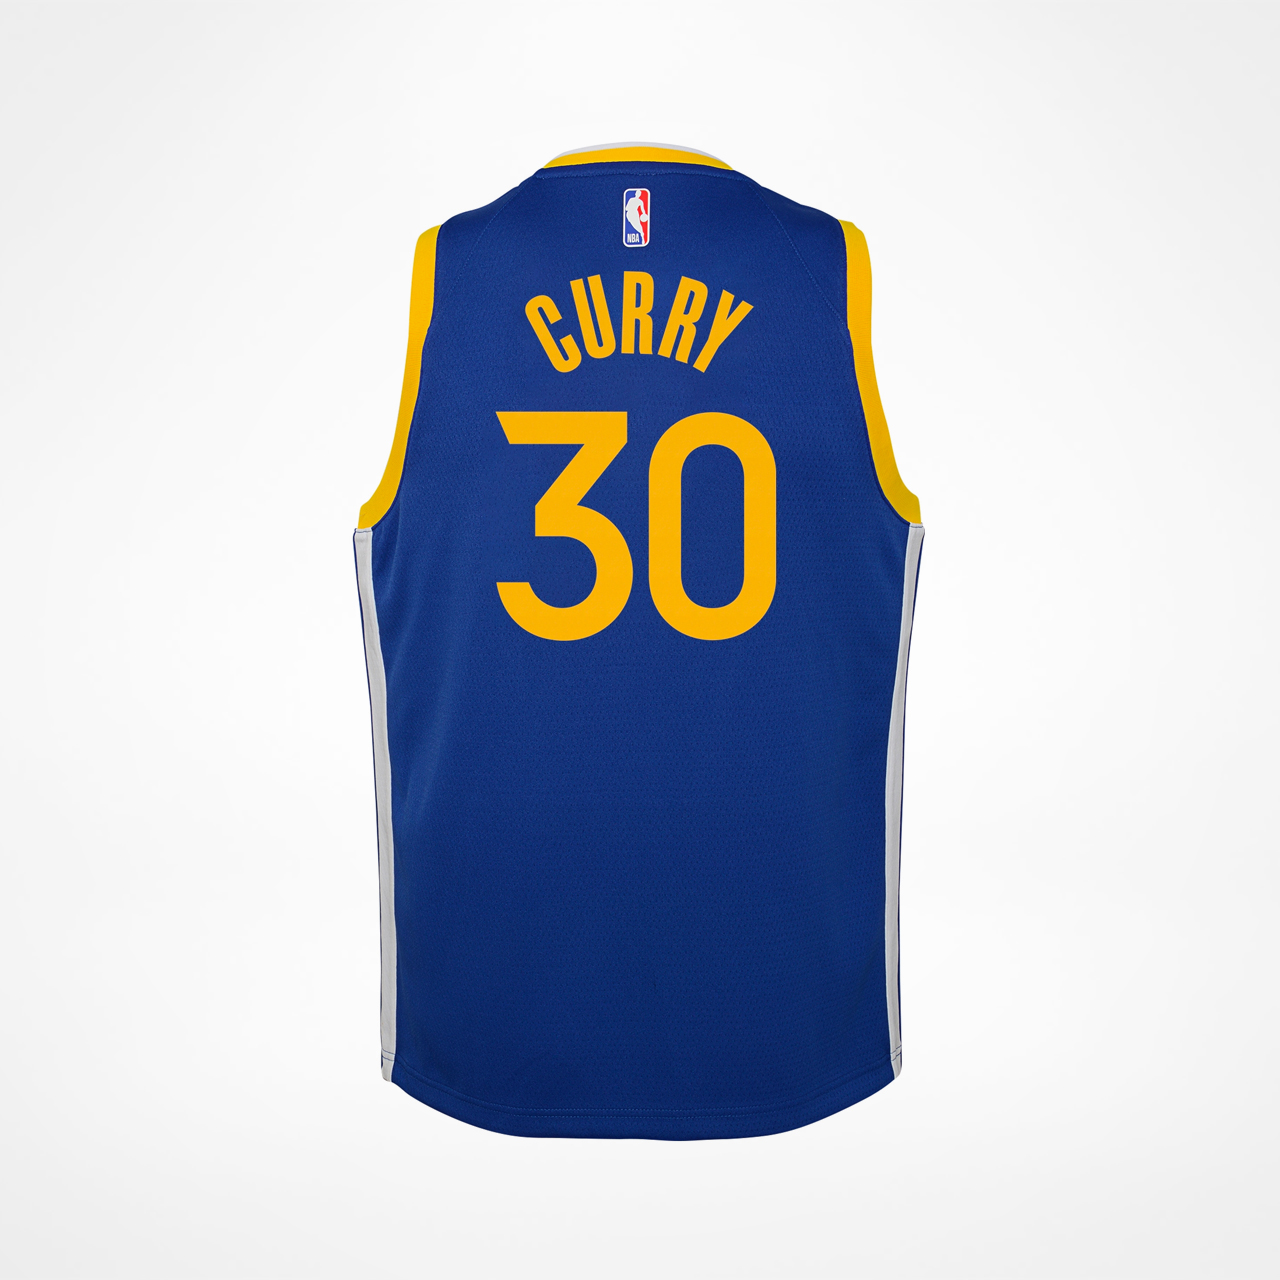 Golden State Warriors Matchtröja Curry 30 - Junior hos Supporterprylar.se